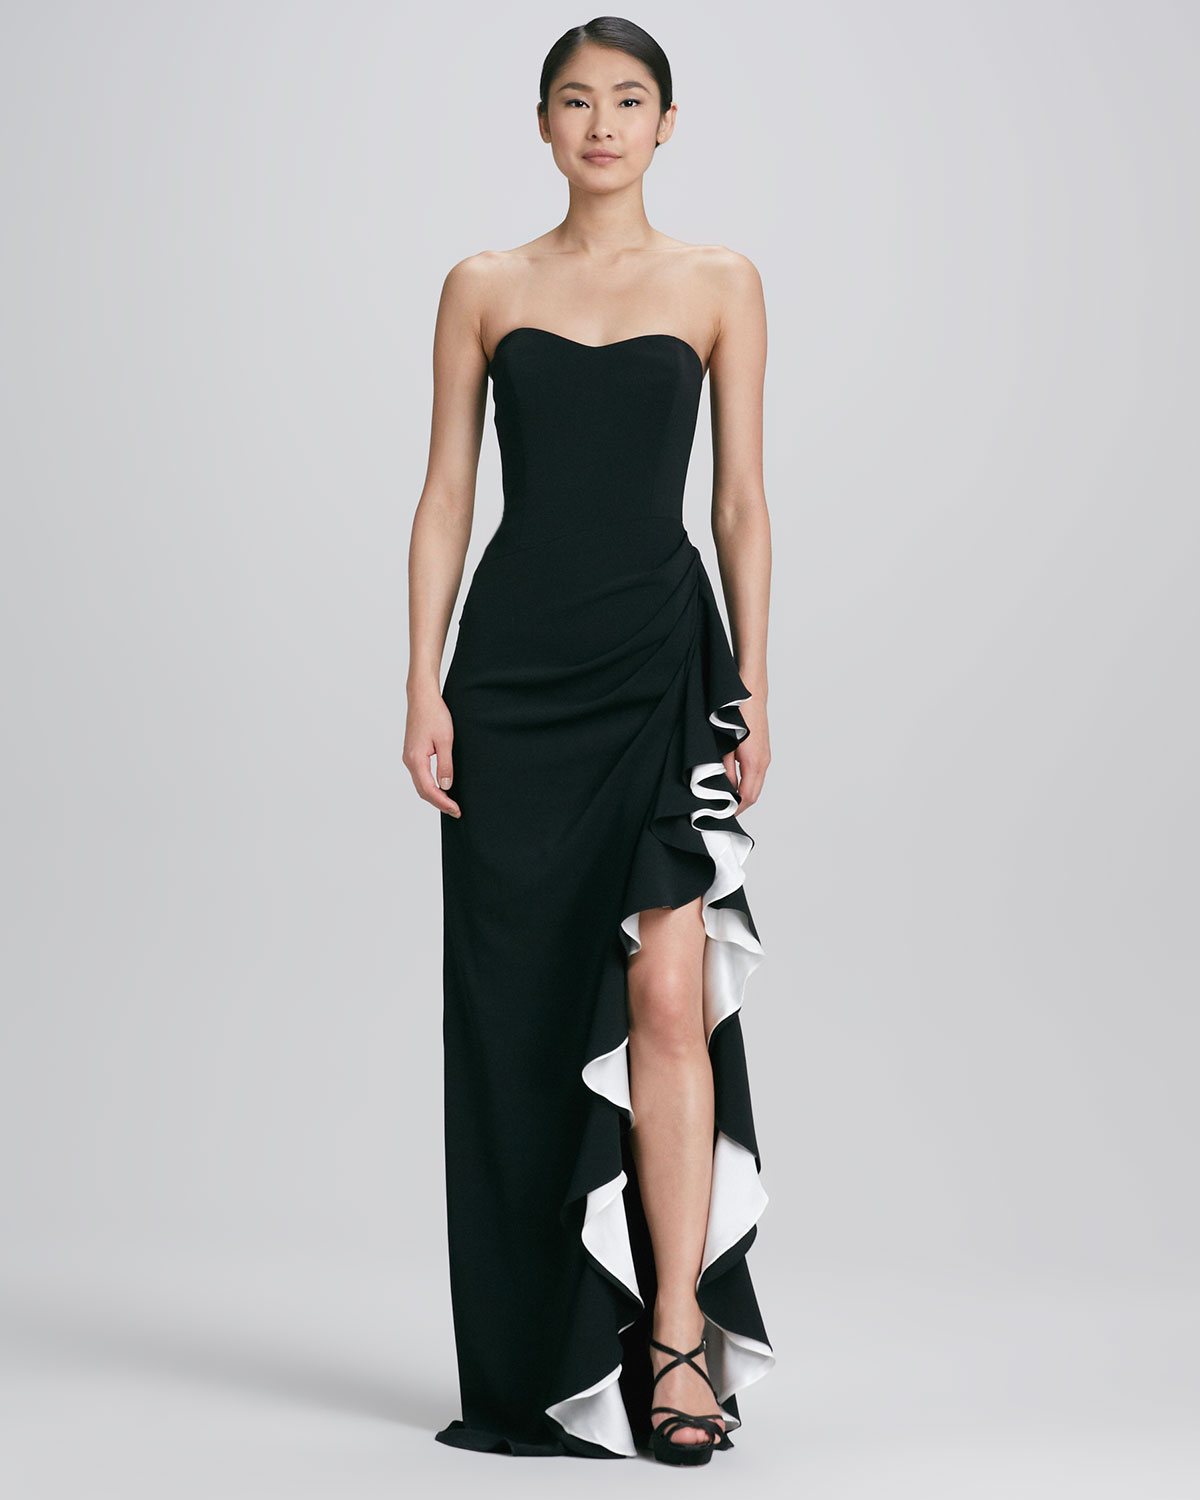 Lyst - Badgley Mischka Strapless Colorblock Gown in Black